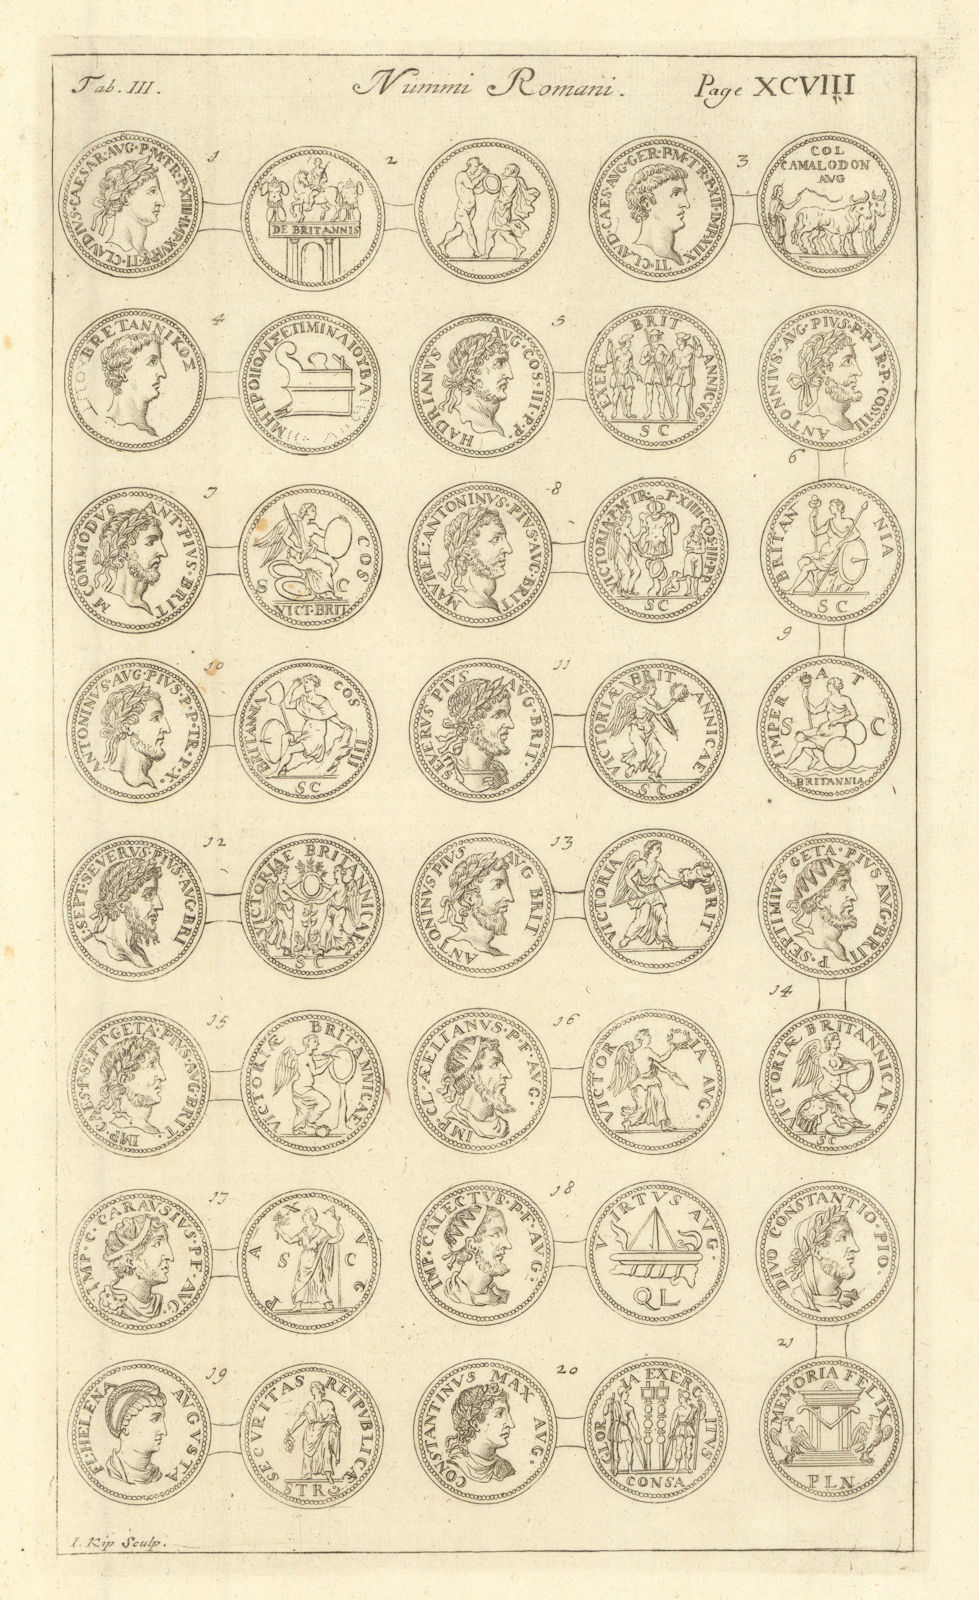 Roman British Coins. 'NUMMI ROMANI' (I)  from Camden's Britannia 1695 print